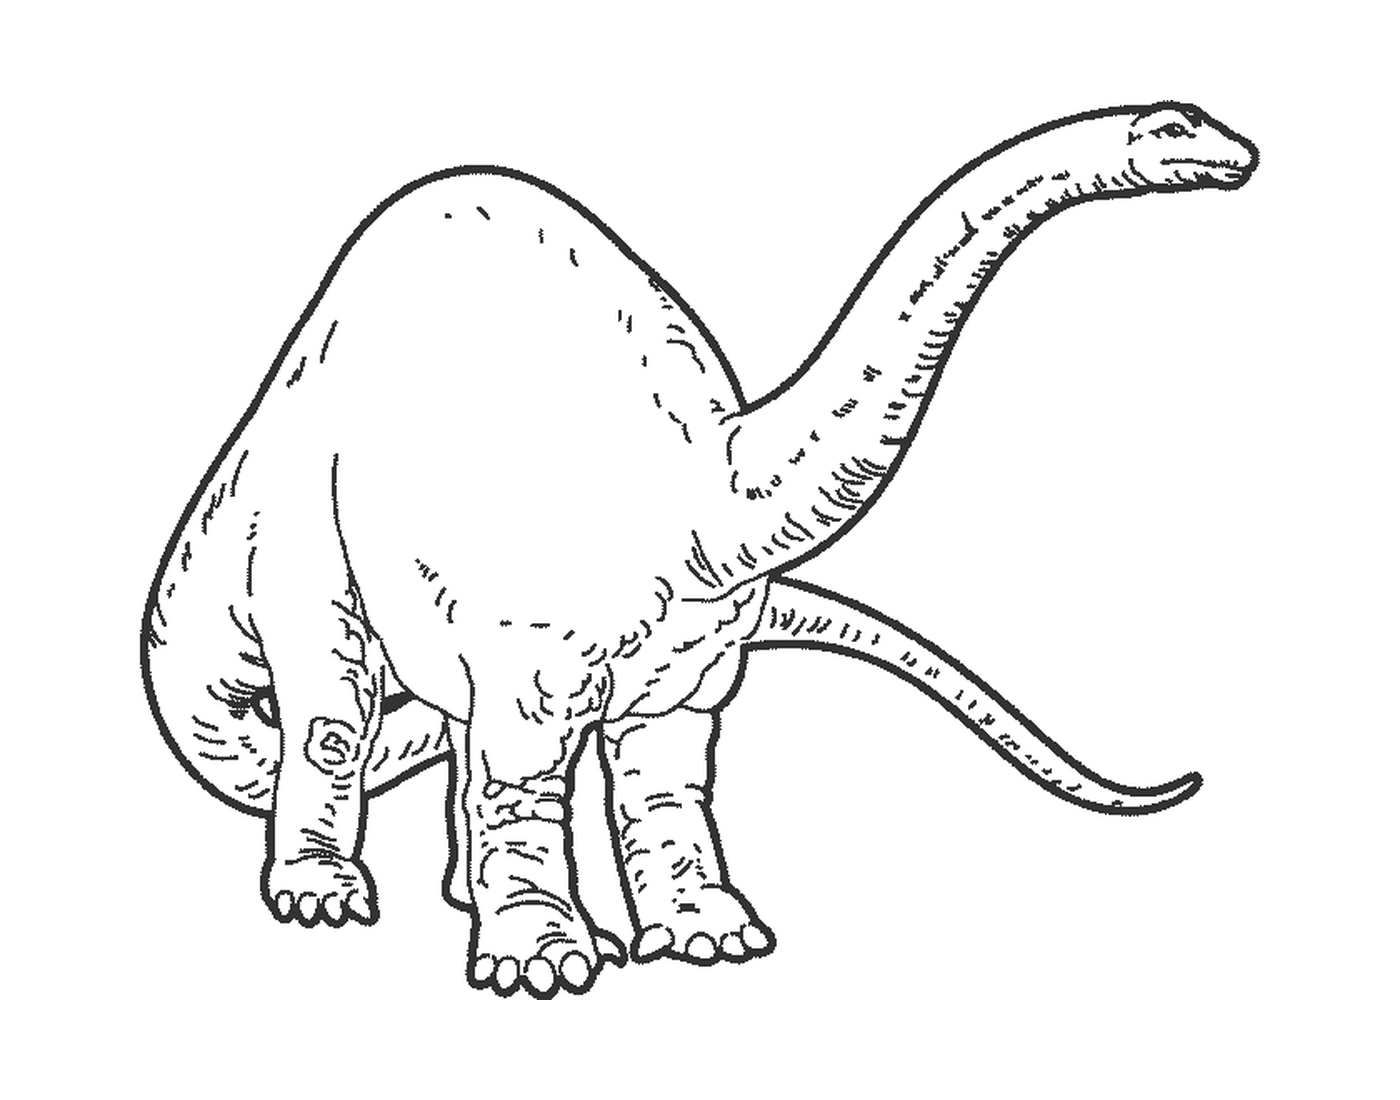  A long-legged animal 